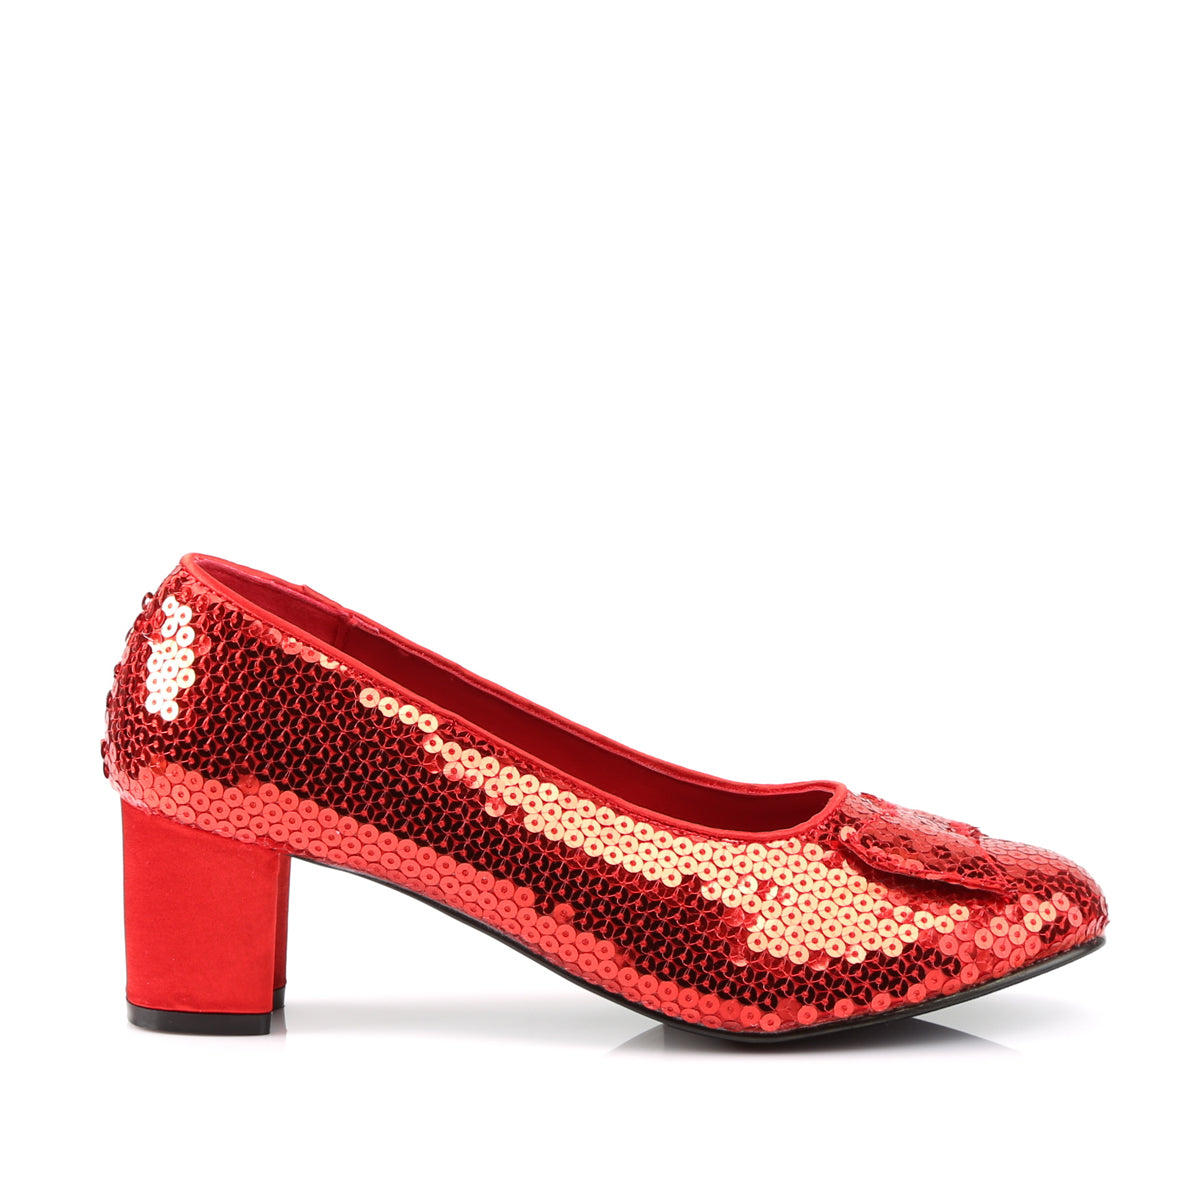 DOROTHY-01 Fancy Dress Costume Funtasma Women's Shoes Red Sequins